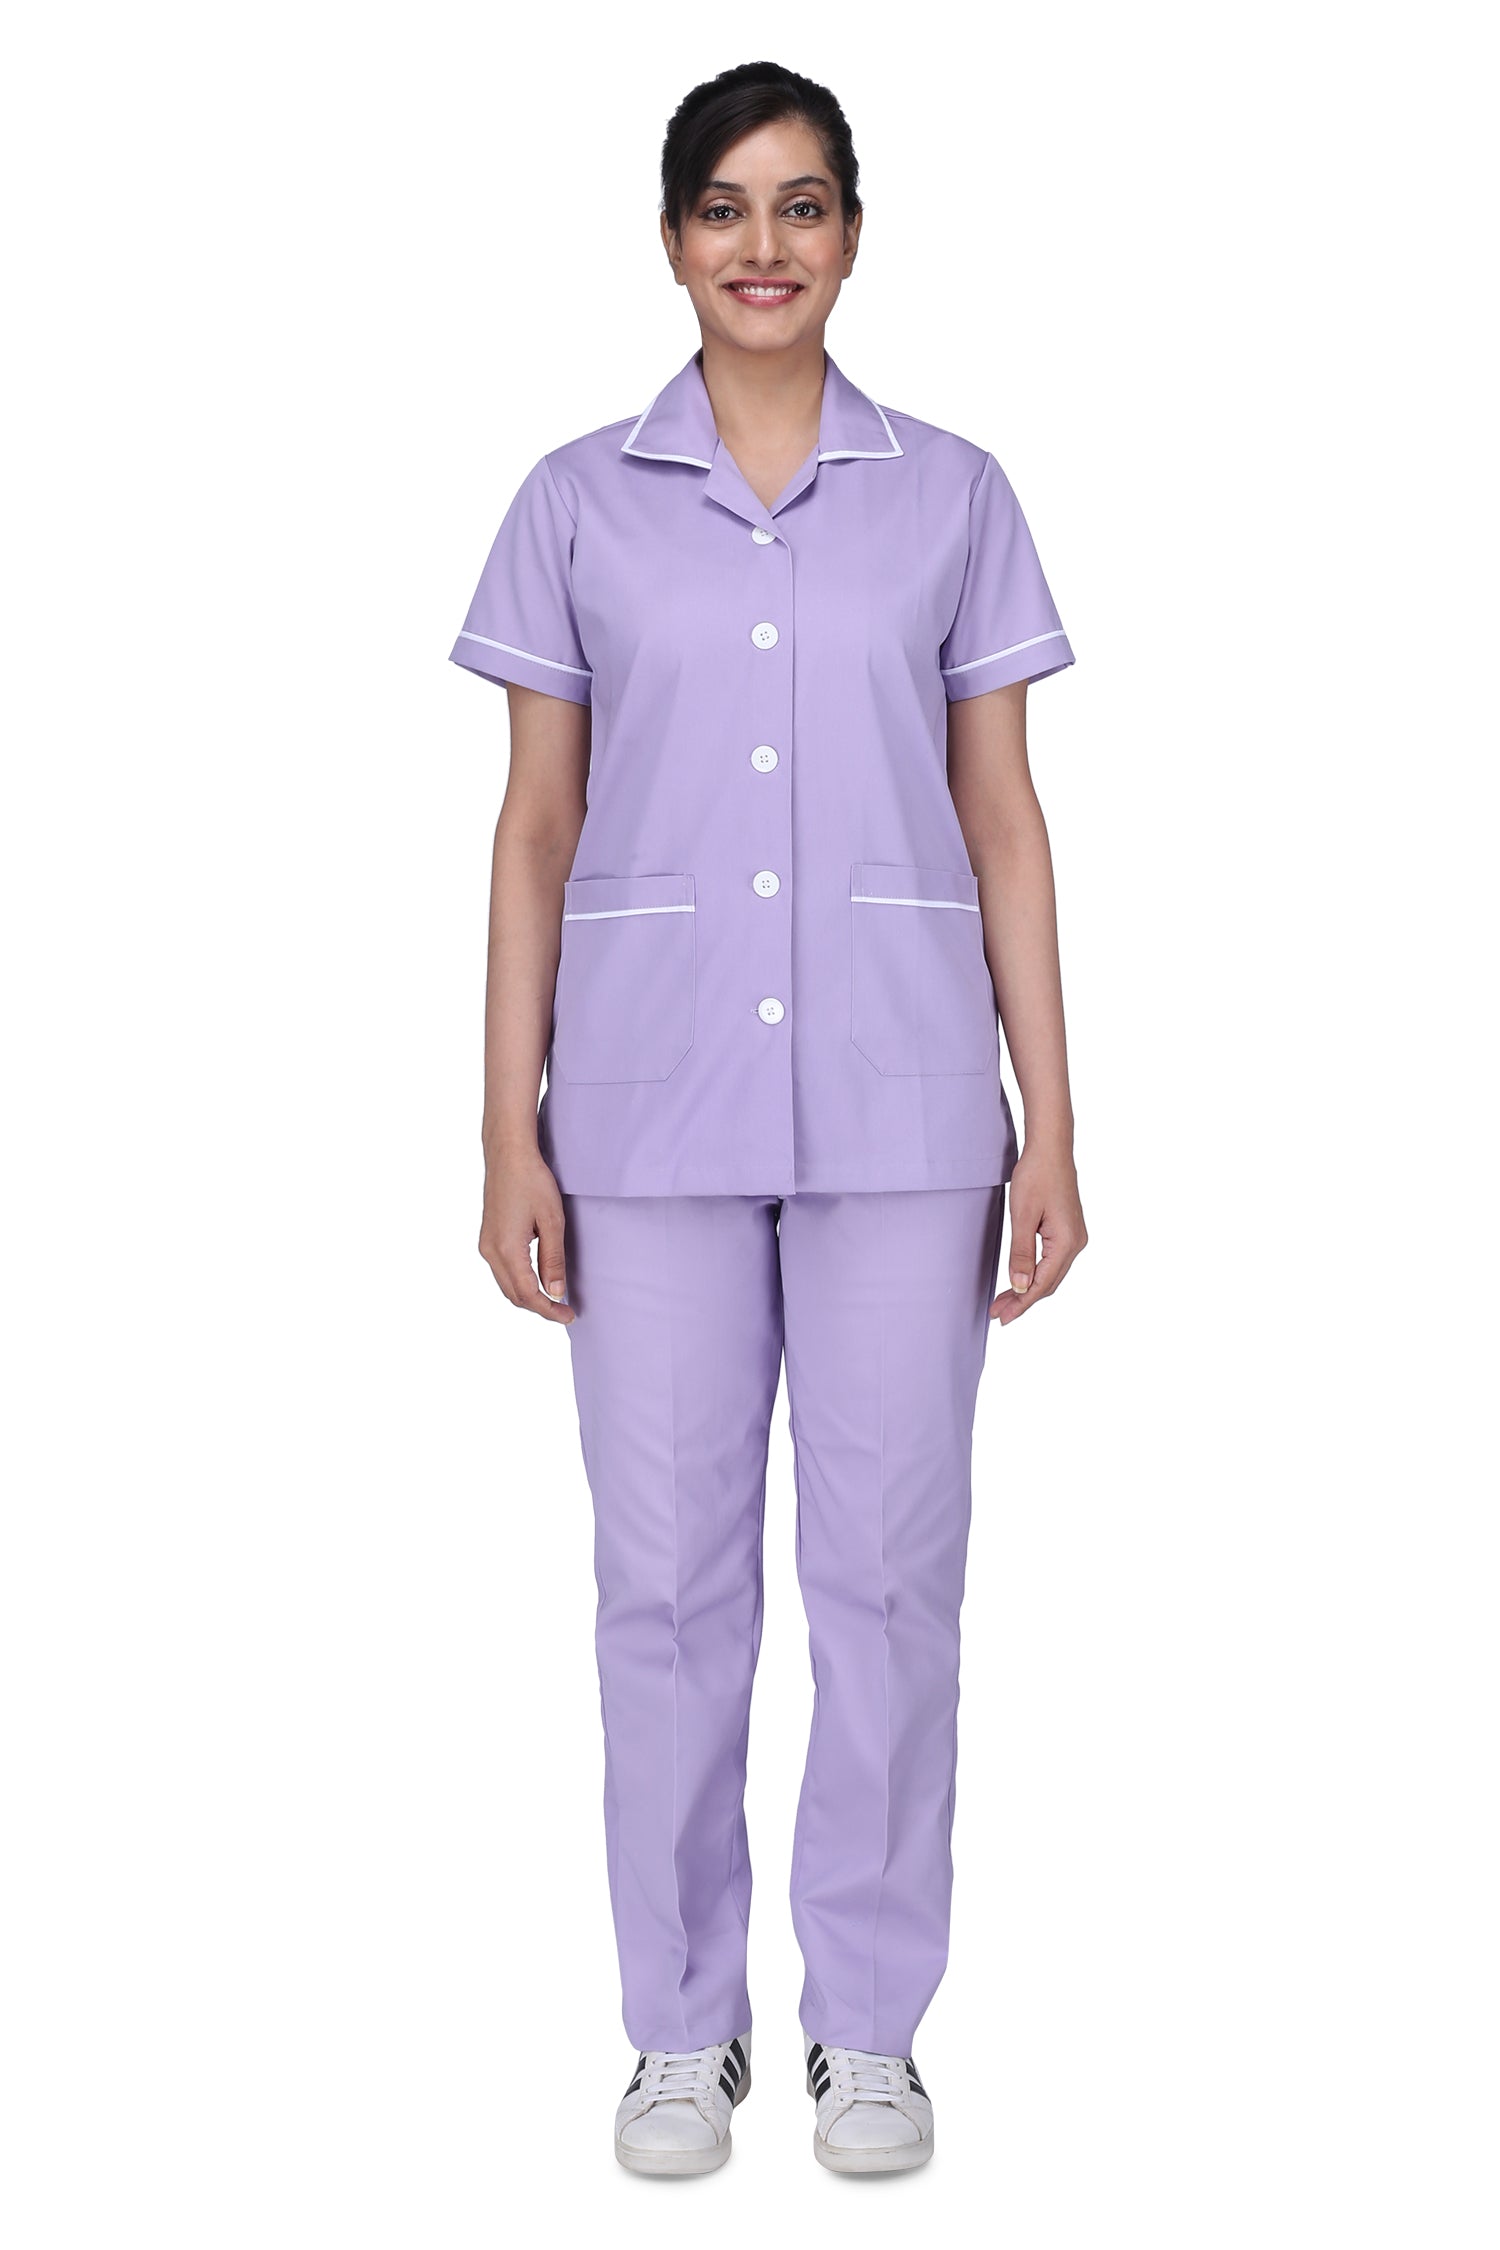 Unisex Blue OT Technician Dress, For Hospital,Clinic